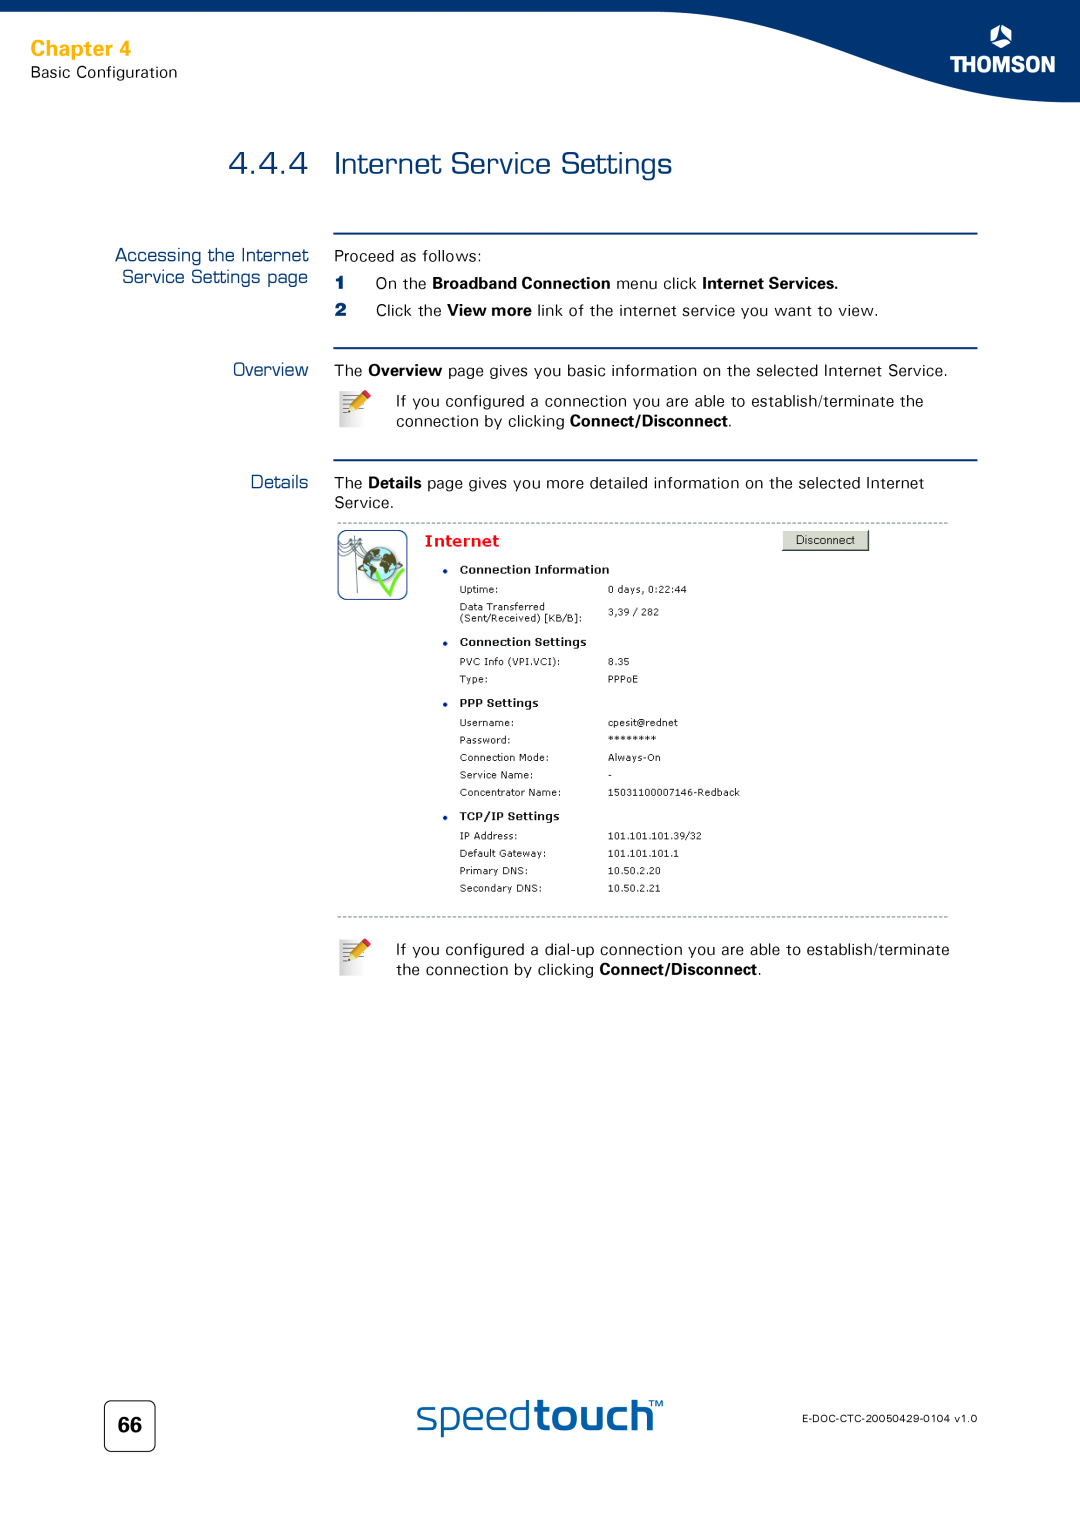 Technicolor - Thomson 620, 605 4.4.4, Internet Service Settings, Accessing the Internet, Service Settings page, Chapter 